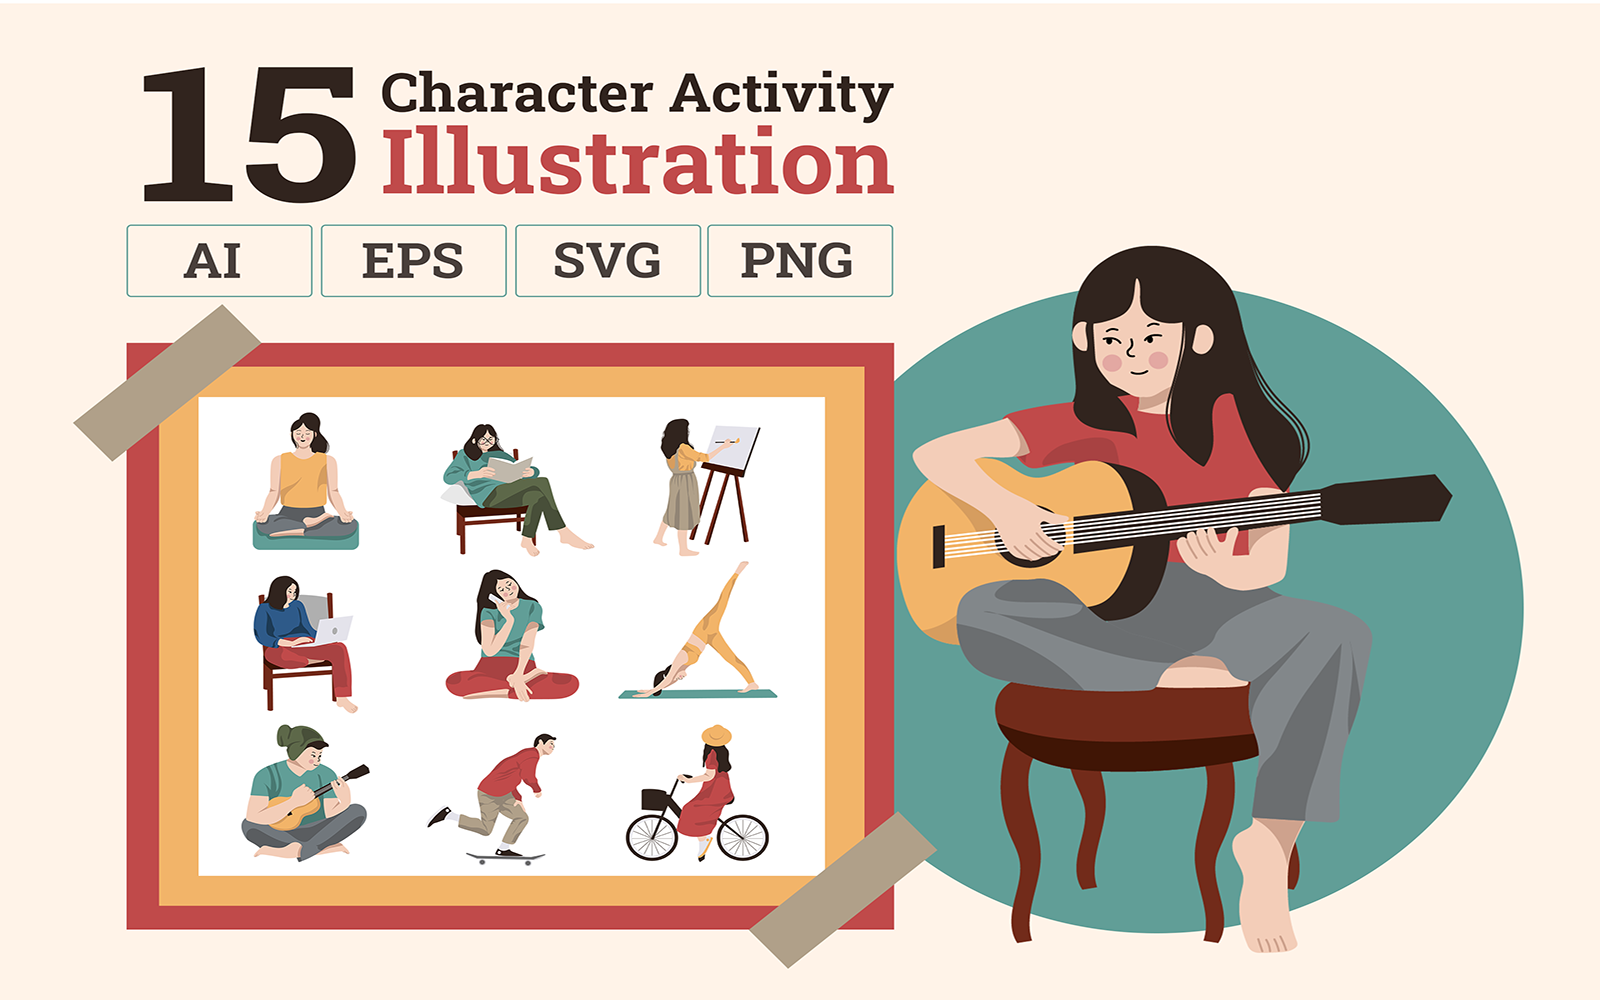 Character Activity - Illustration